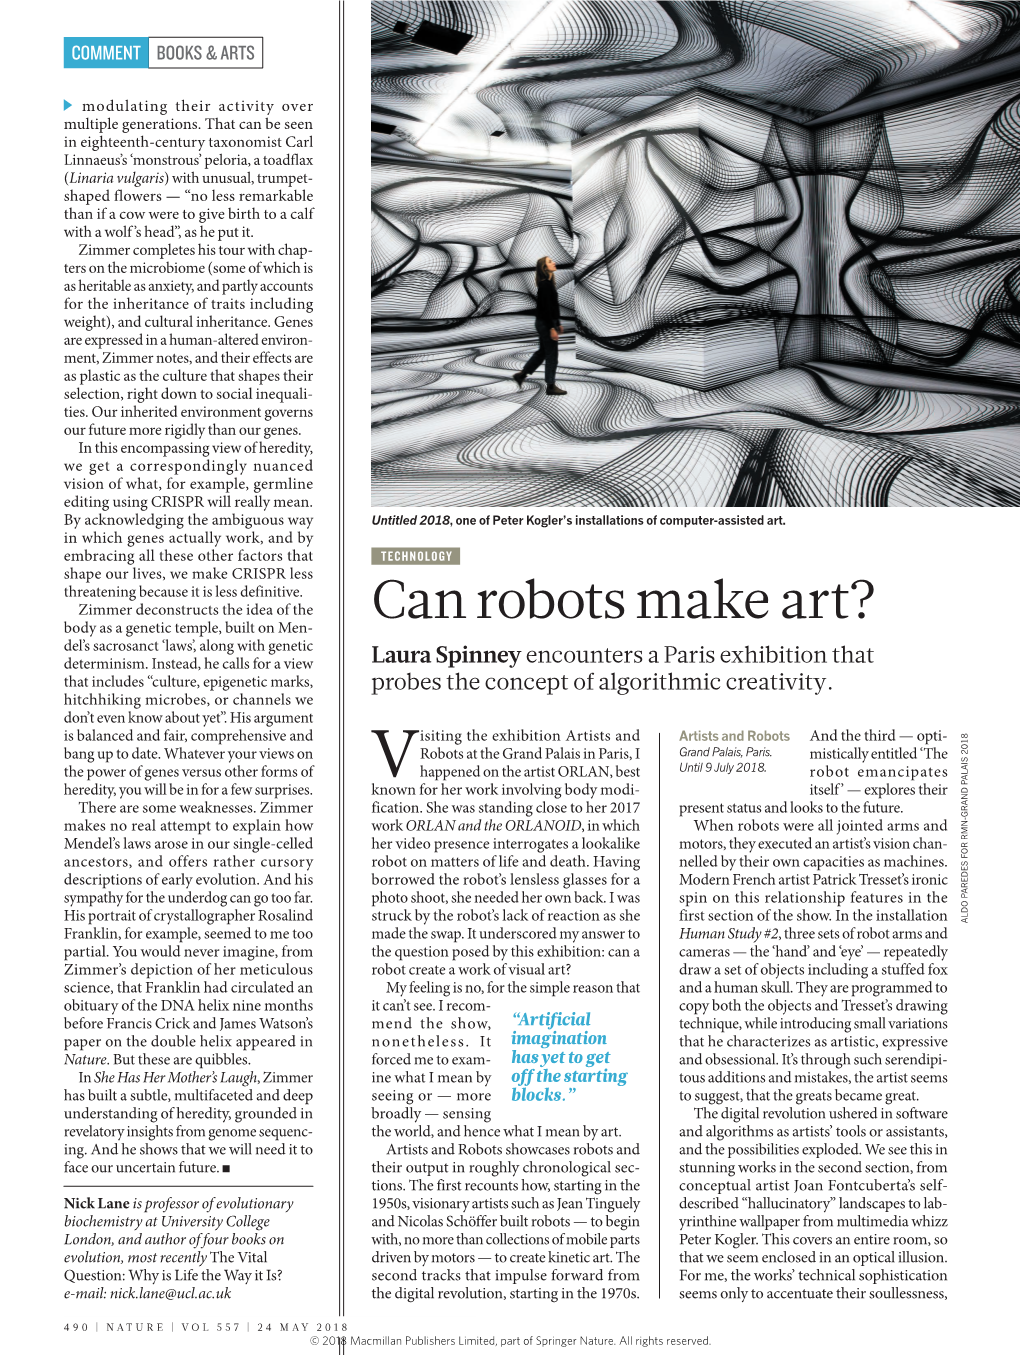 Can Robots Make Art? Del’S Sacrosanct ‘Laws’, Along with Genetic Determinism